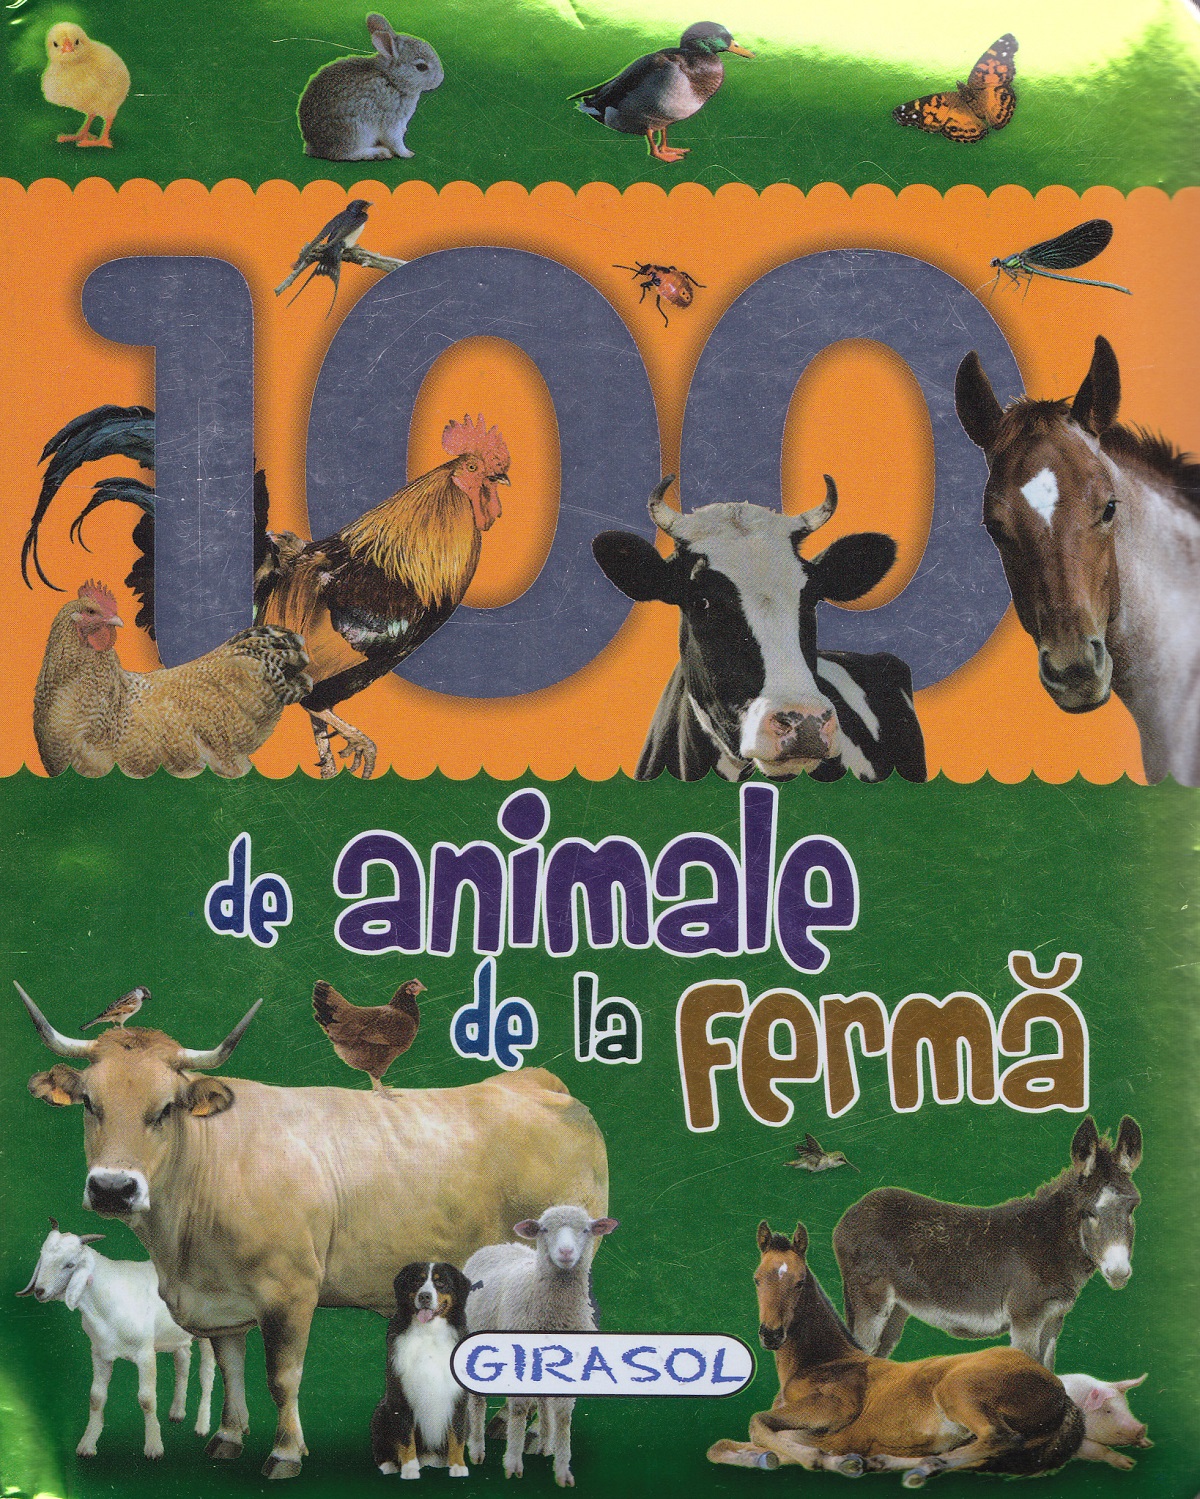 100 de animale de la ferma